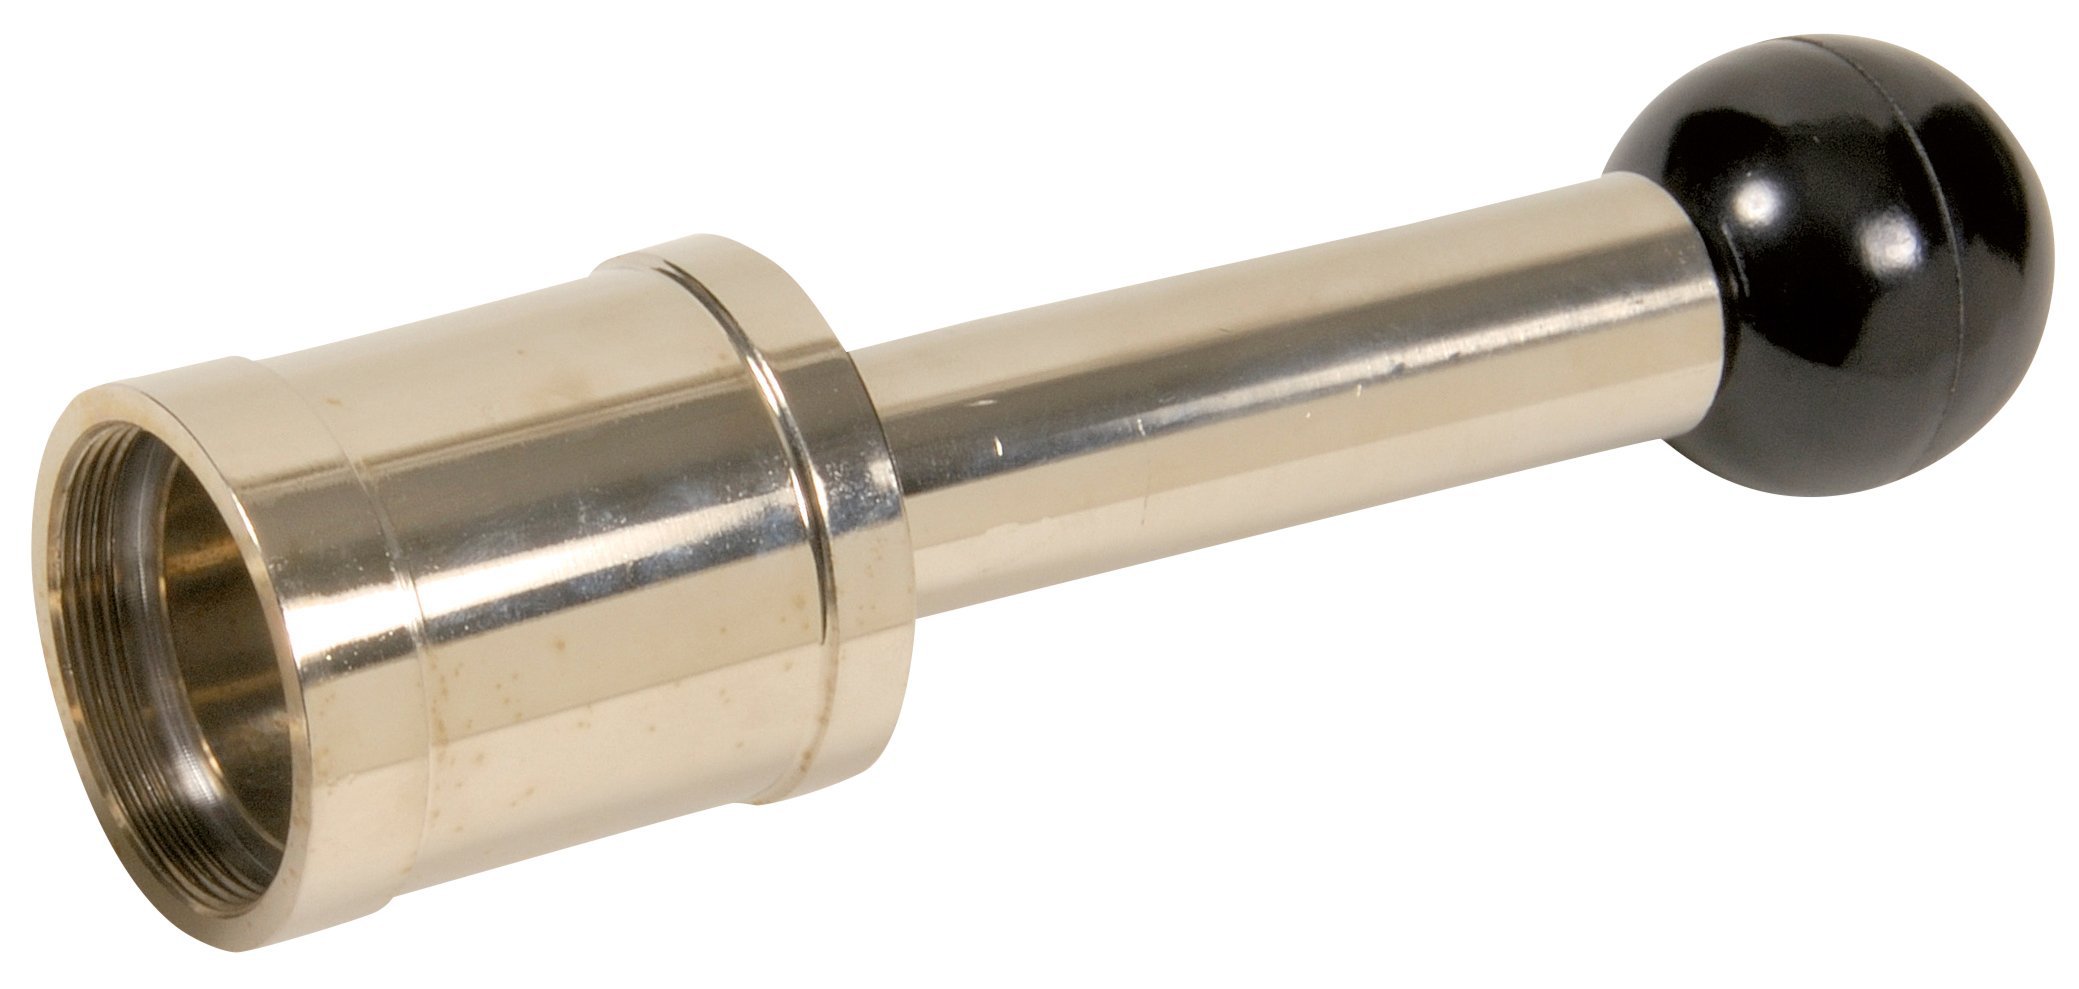 Raccord laiton male M1(26/34) pour tuyau souple diam interne 25.